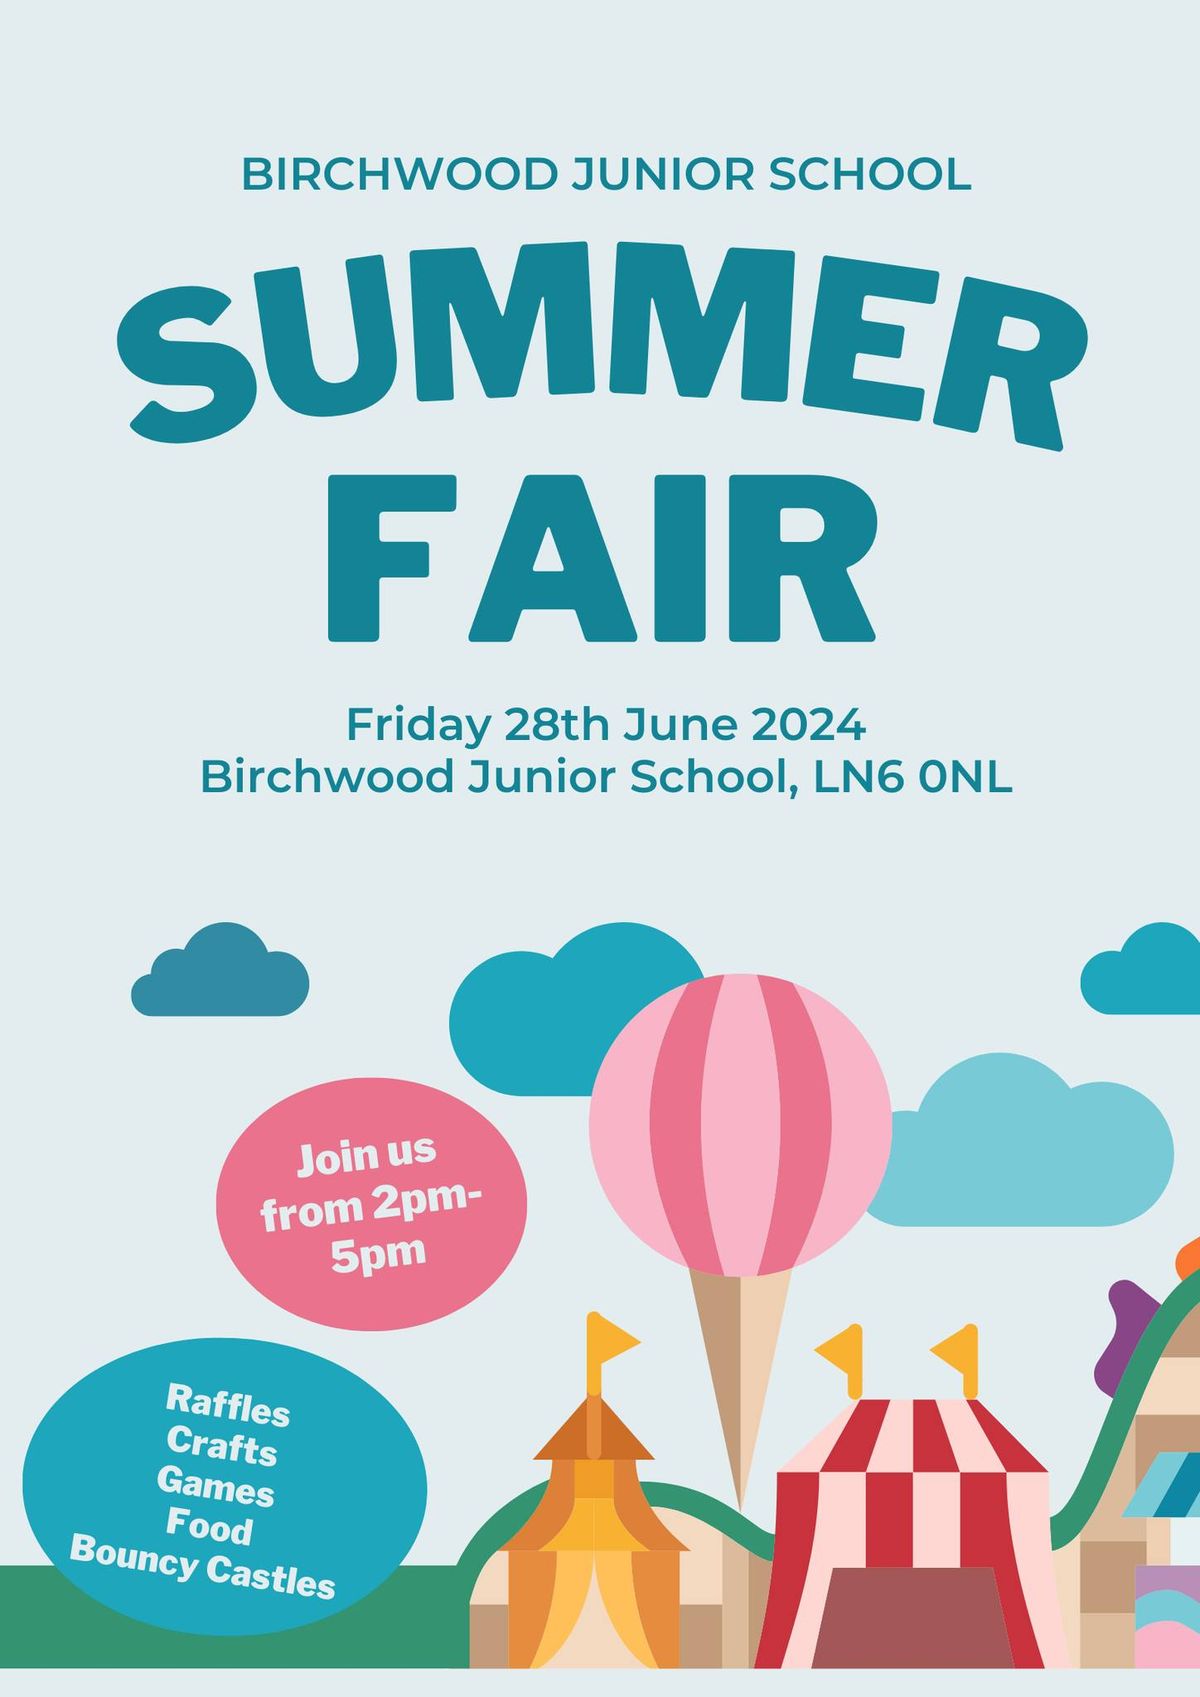 Birchwood Junior School Summer Fair 